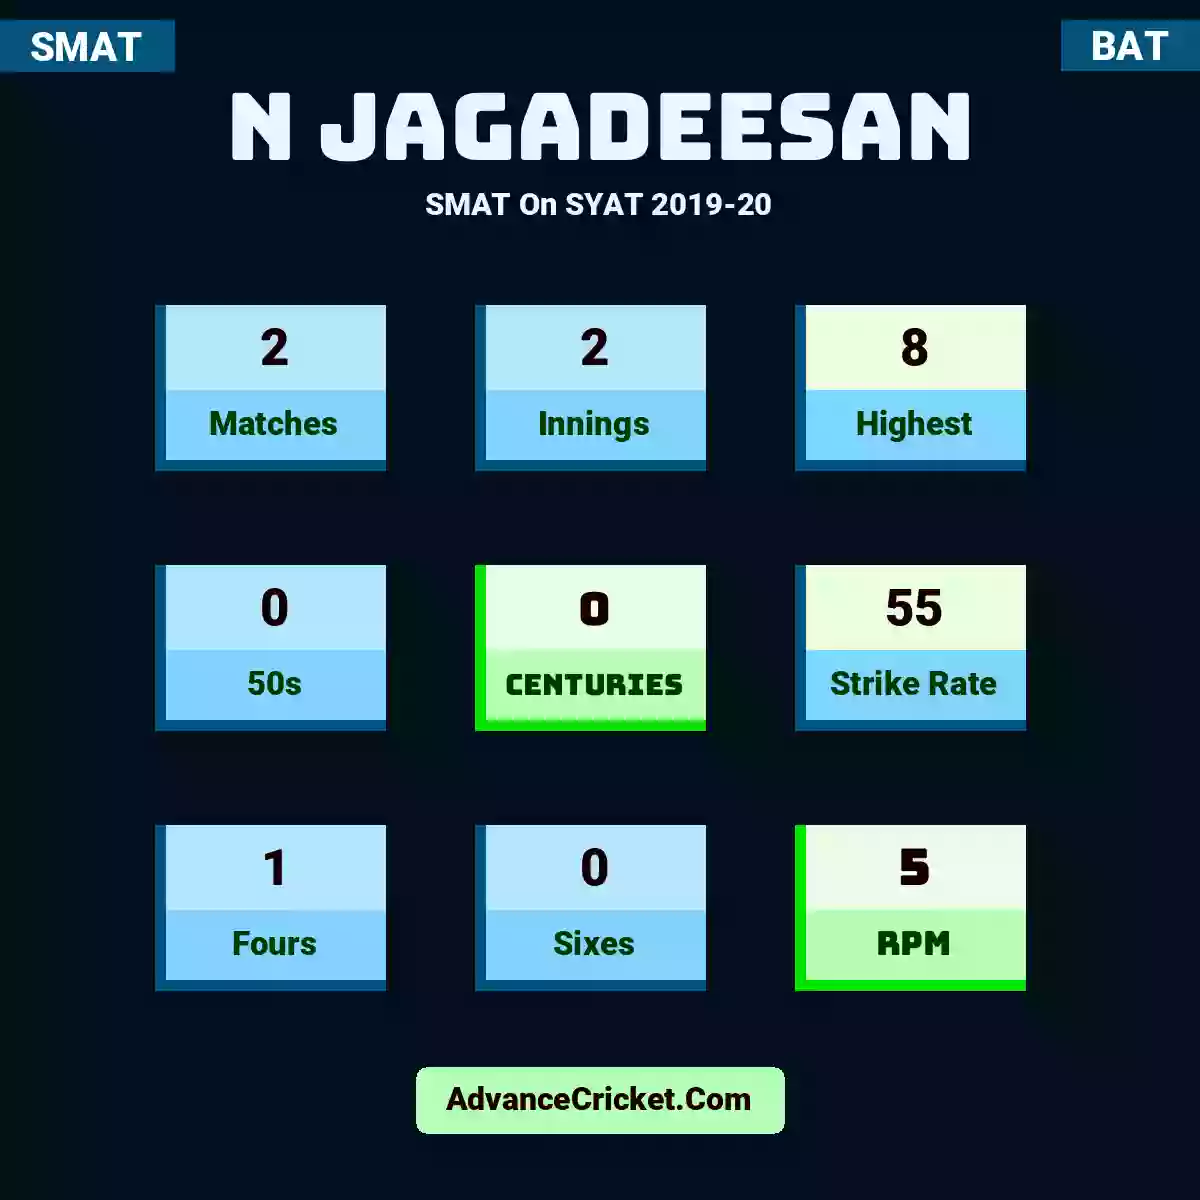 N Jagadeesan SMAT  On SYAT 2019-20, N Jagadeesan played 2 matches, scored 8 runs as highest, 0 half-centuries, and 0 centuries, with a strike rate of 55. N.Jagadeesan hit 1 fours and 0 sixes, with an RPM of 5.